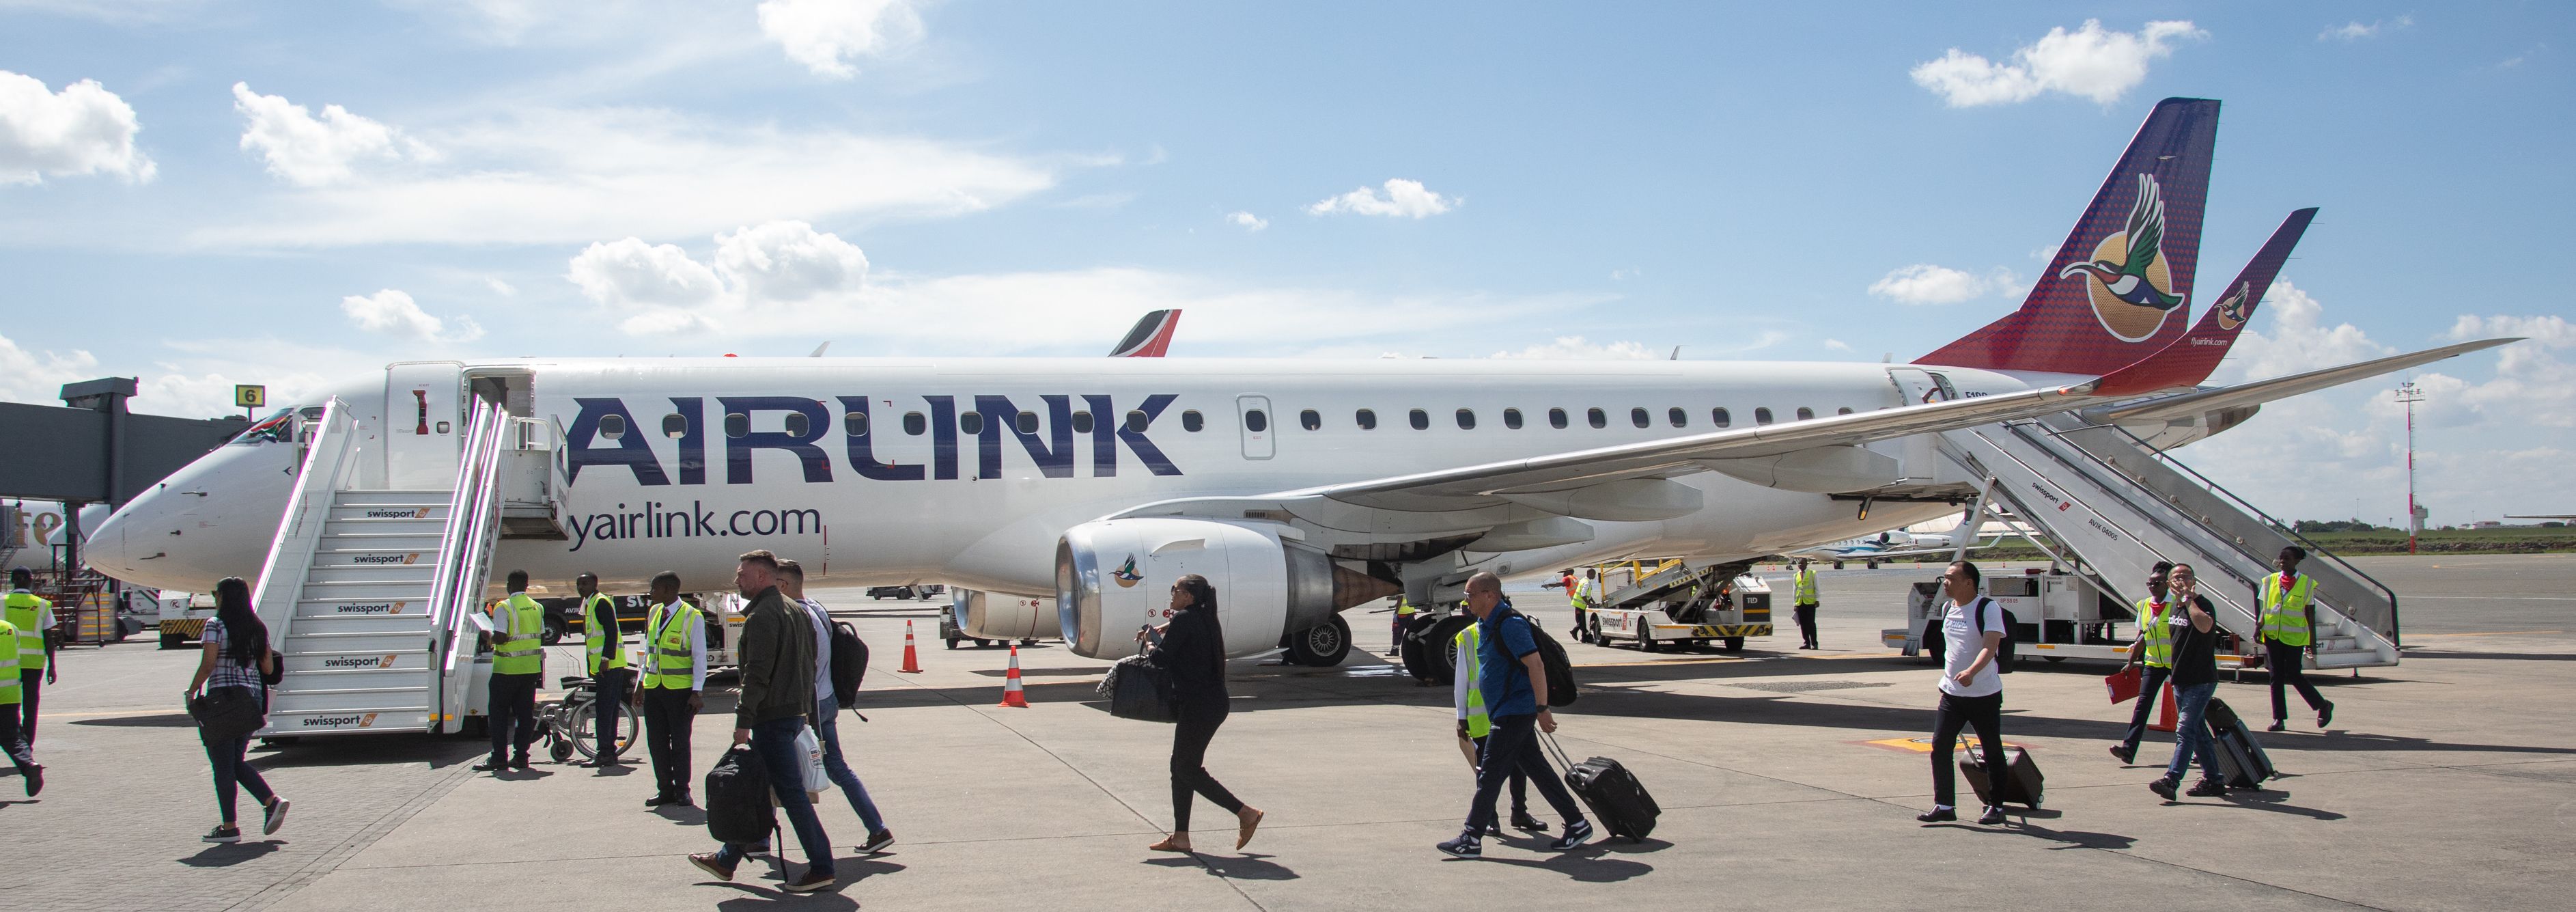 Airlink passengers disembarking at Nairobi Airport